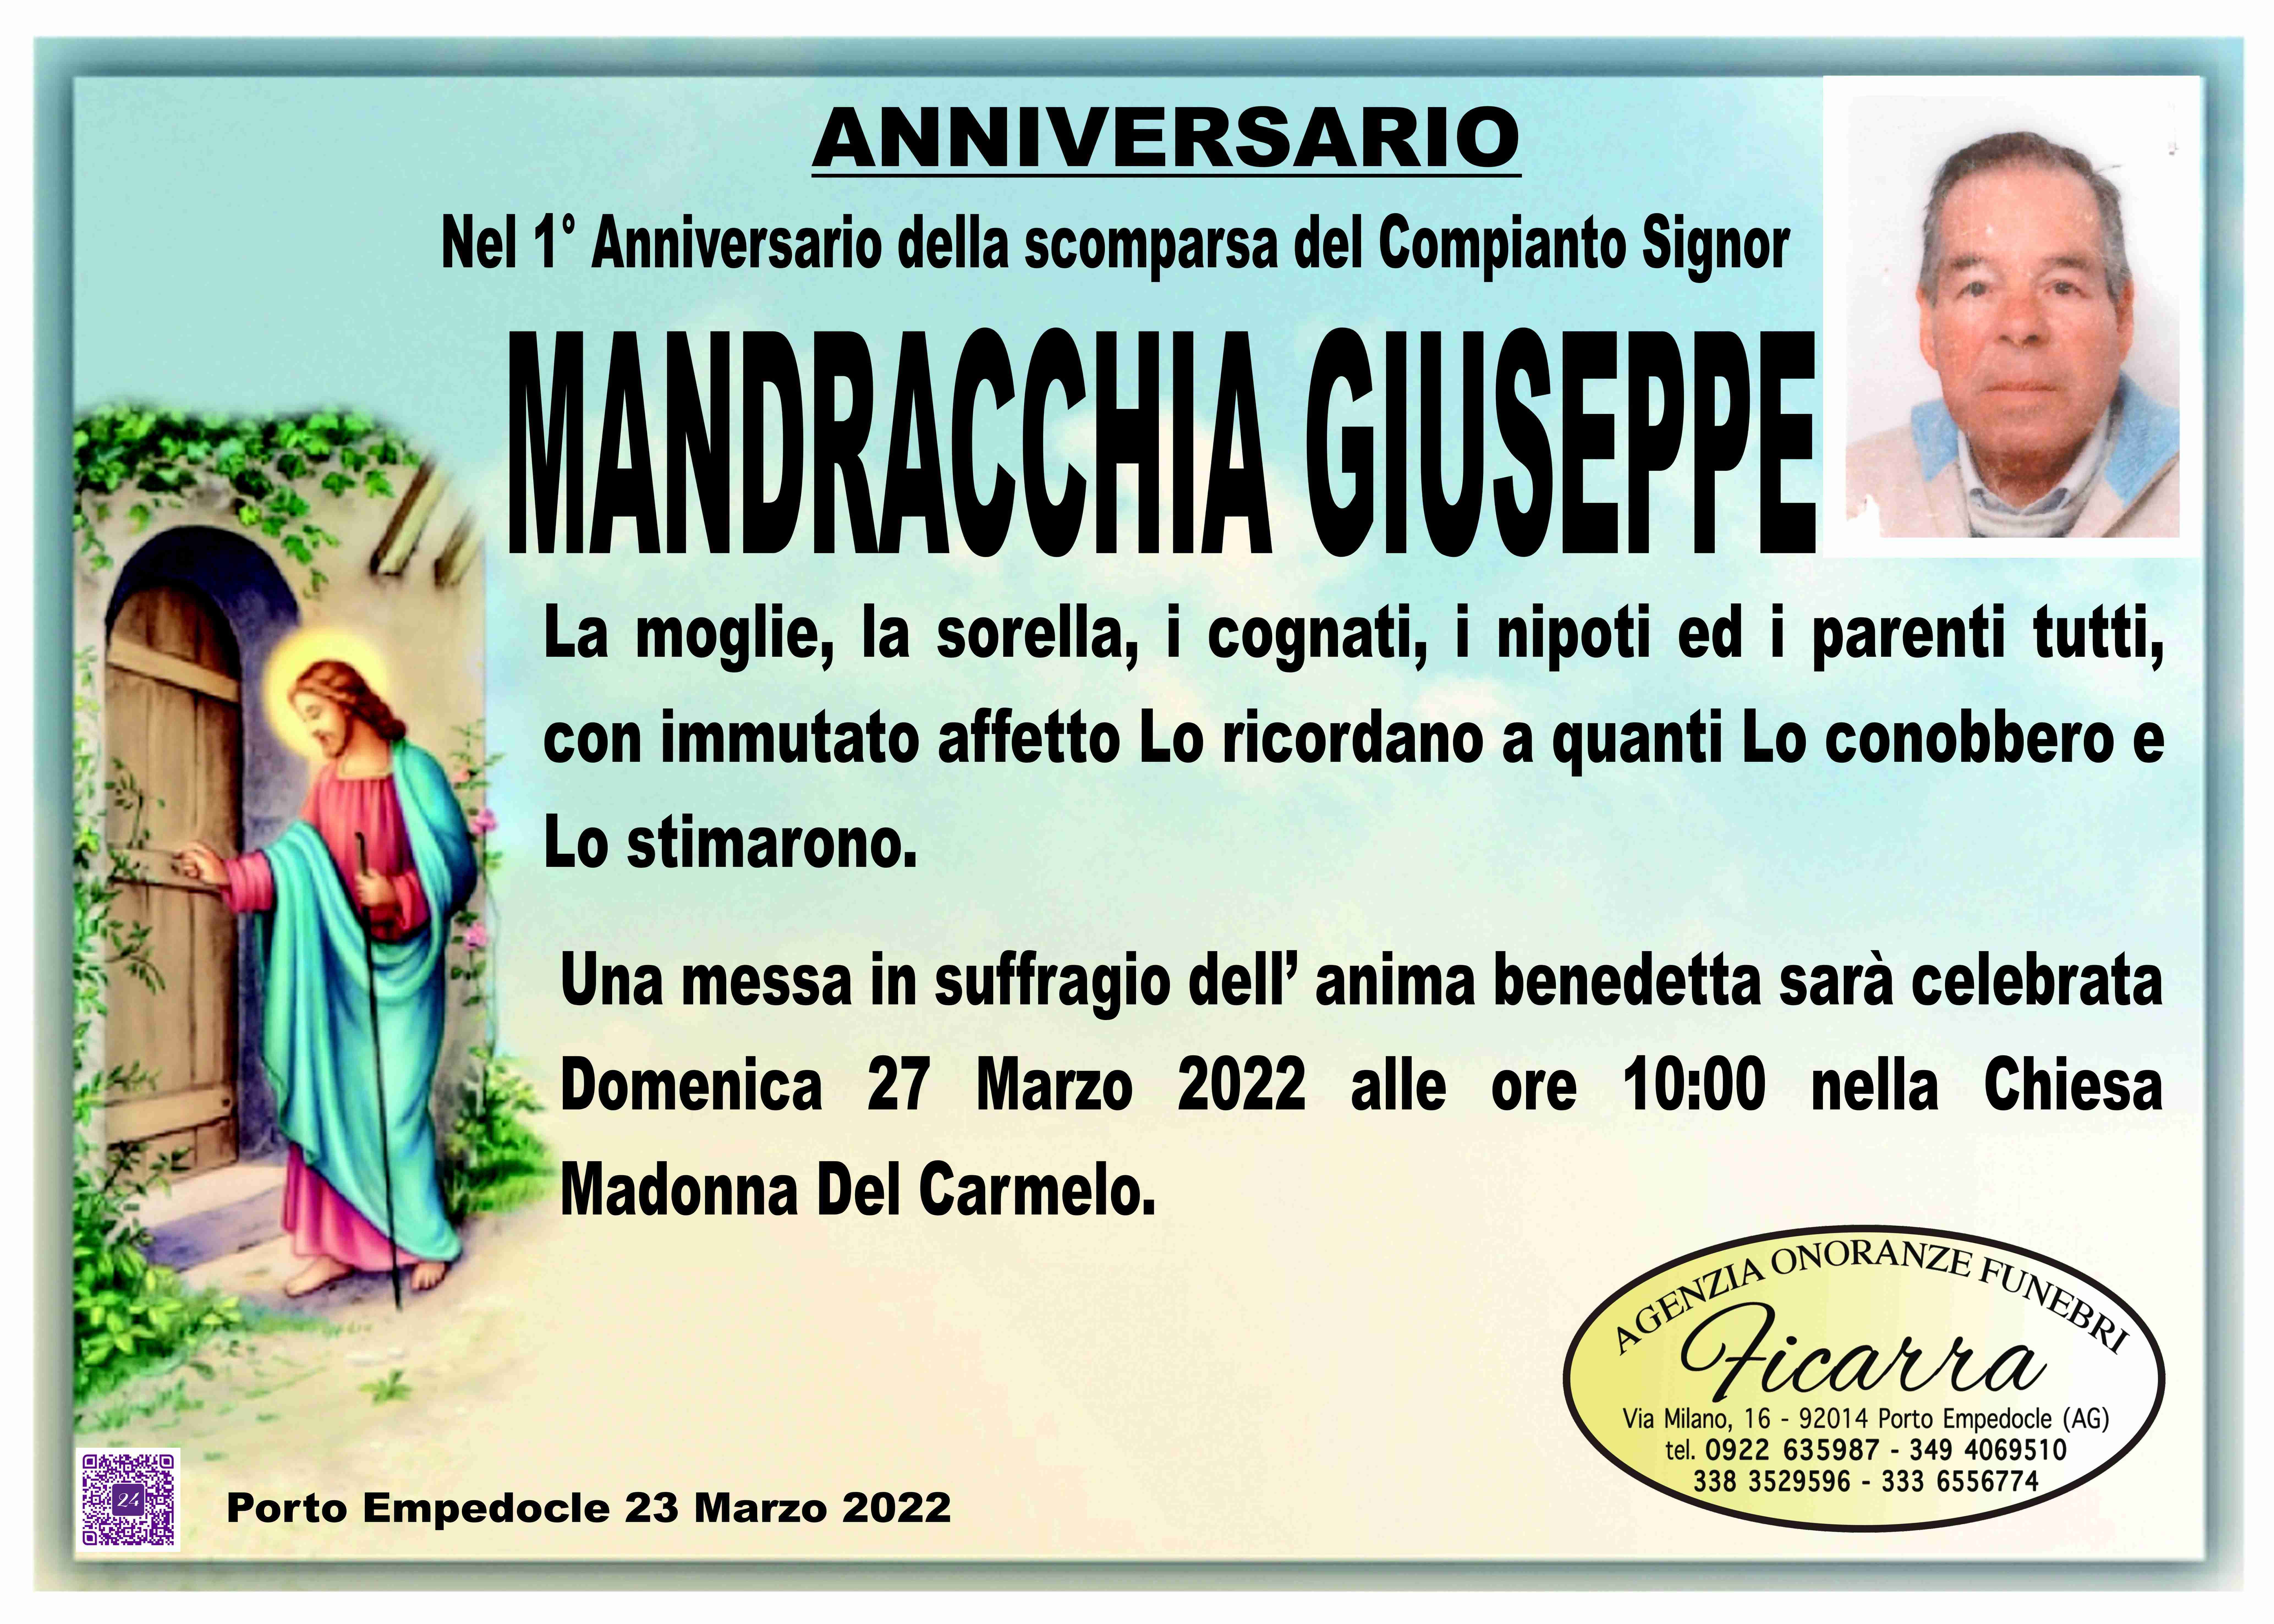 Giuseppe Mandracchia